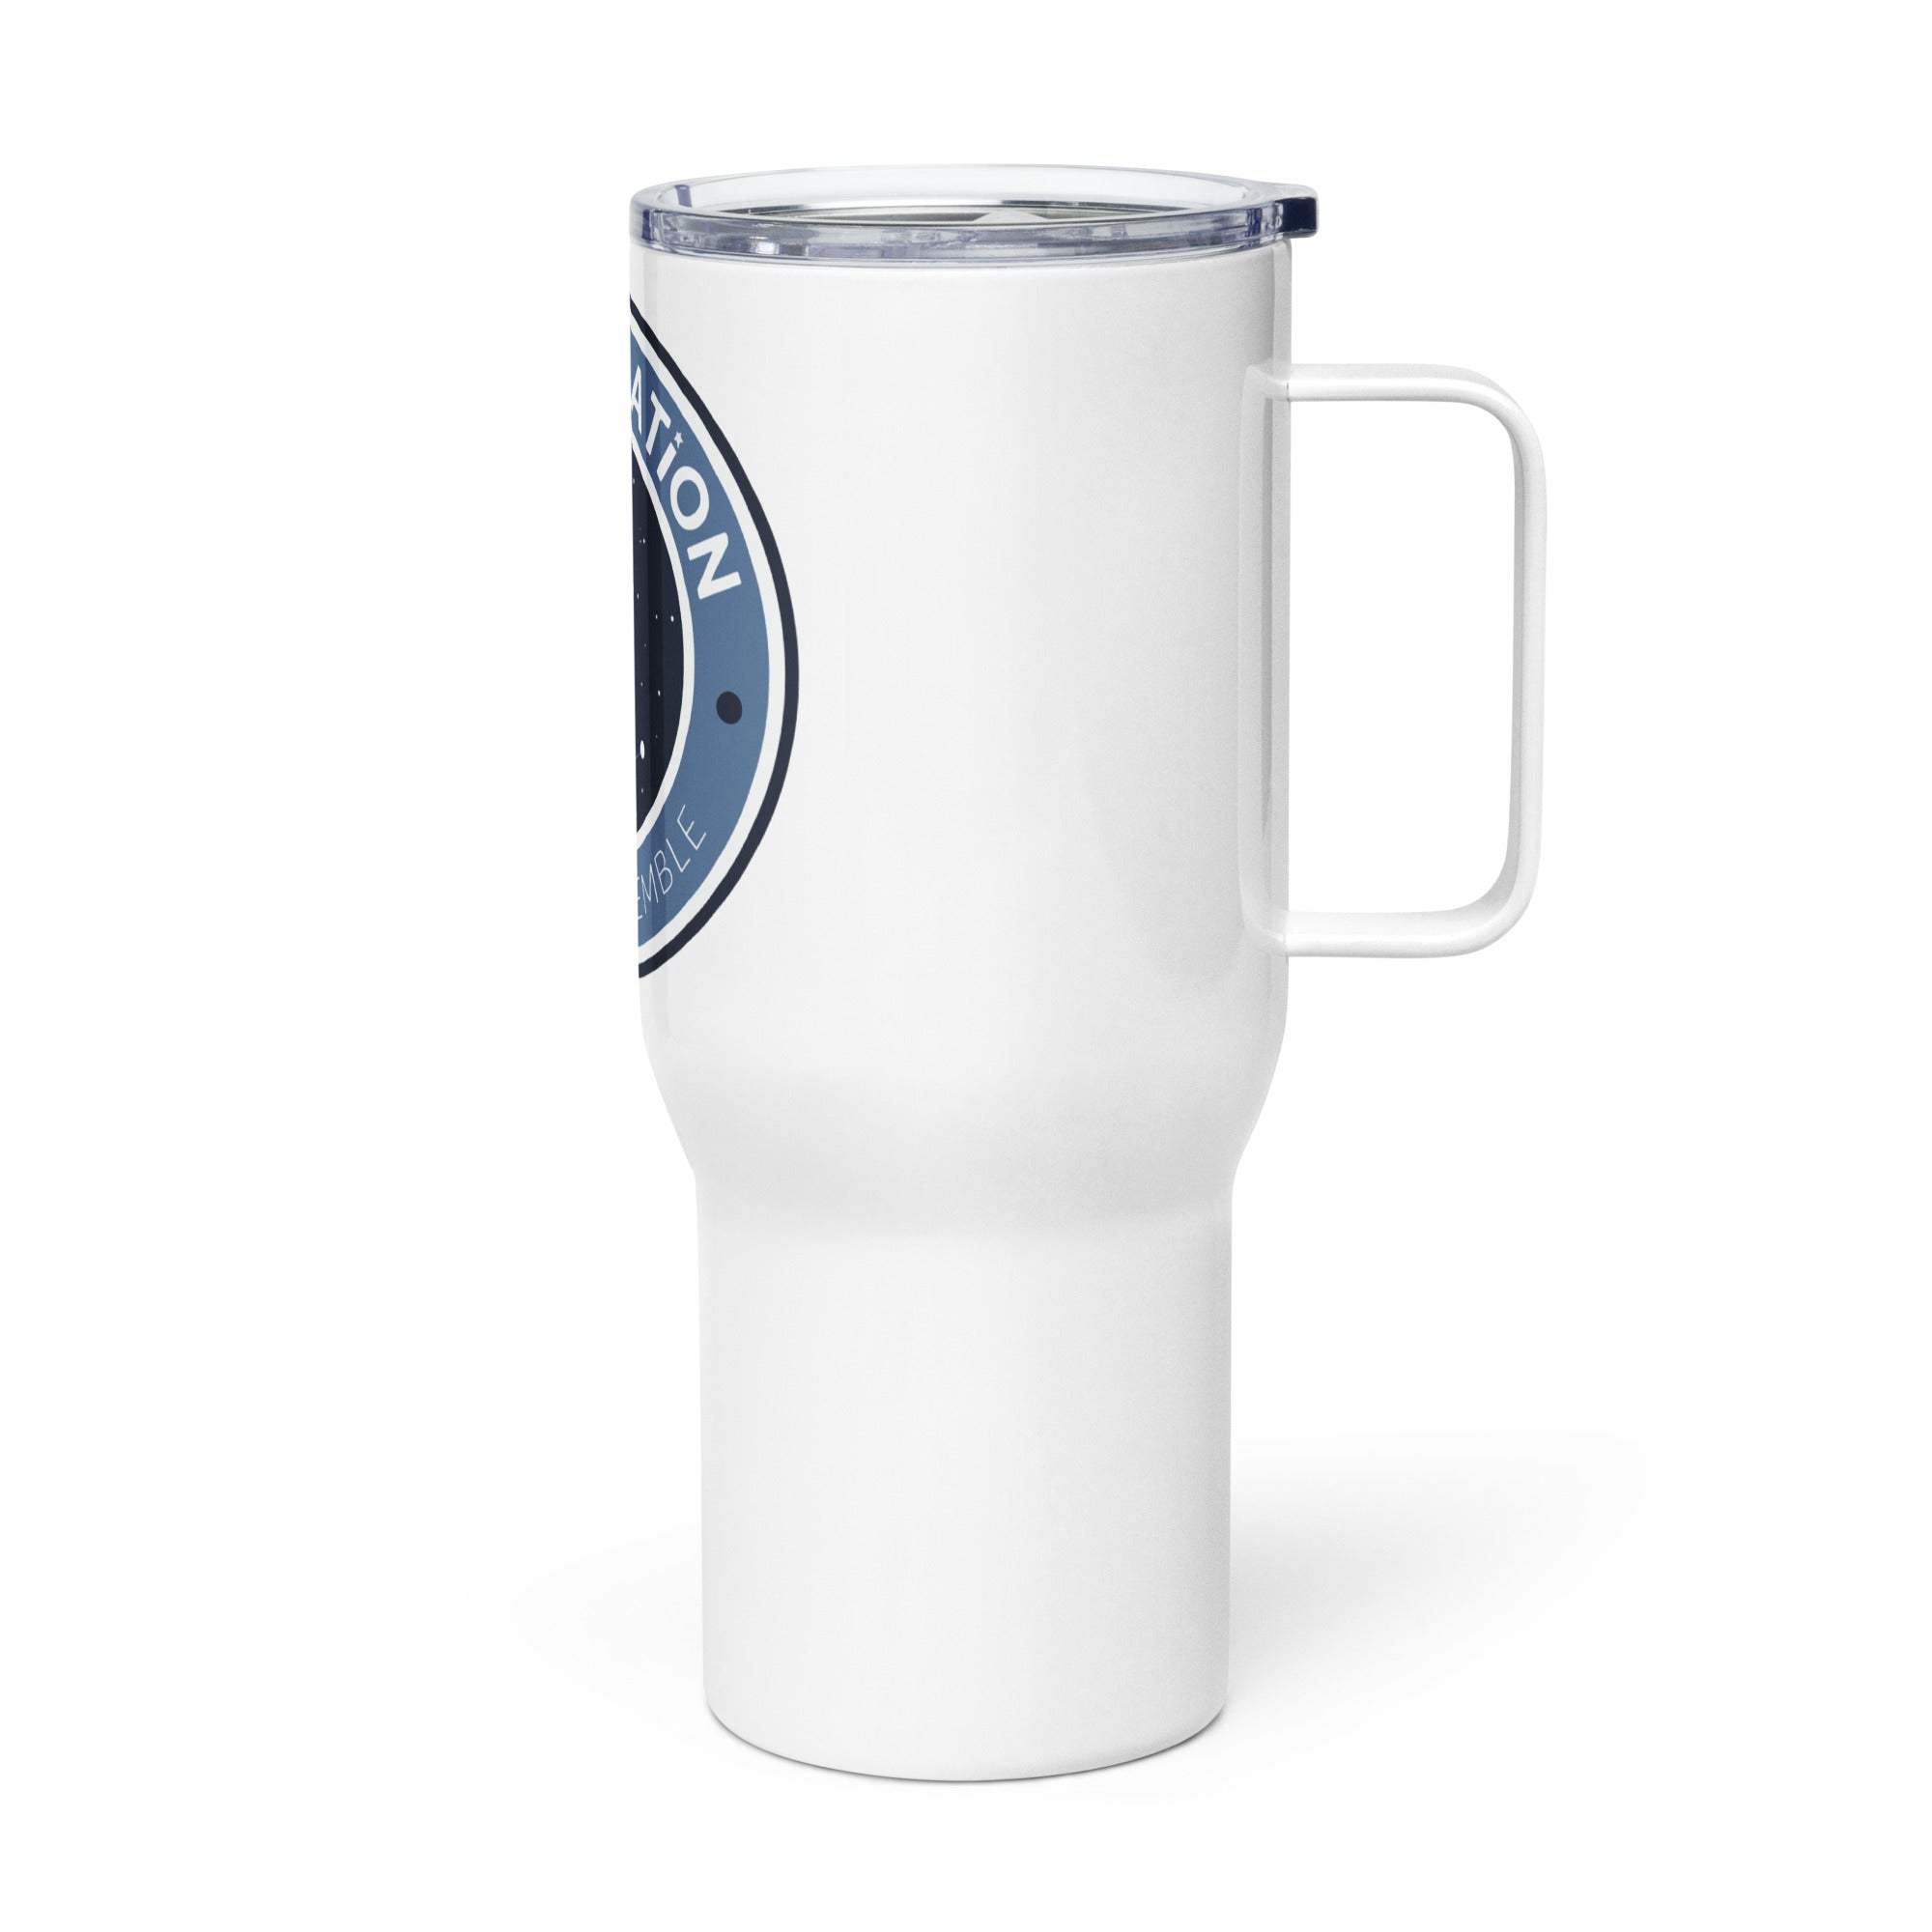 CME Travel mug with a handle